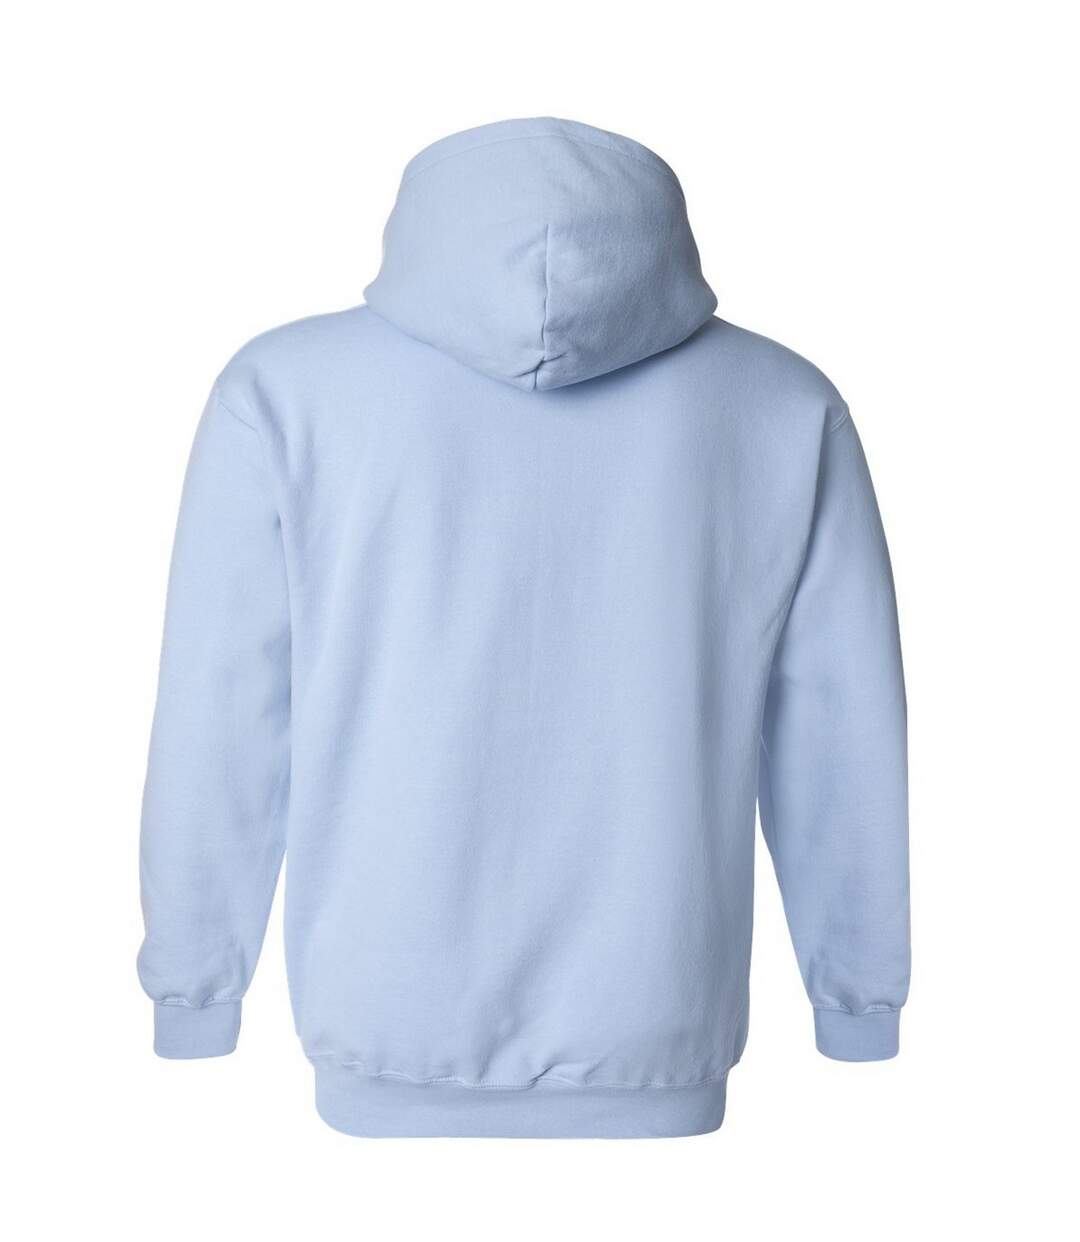 Gildan - Sweatshirt à capuche - Unisexe (Bleu clair) - UTBC468